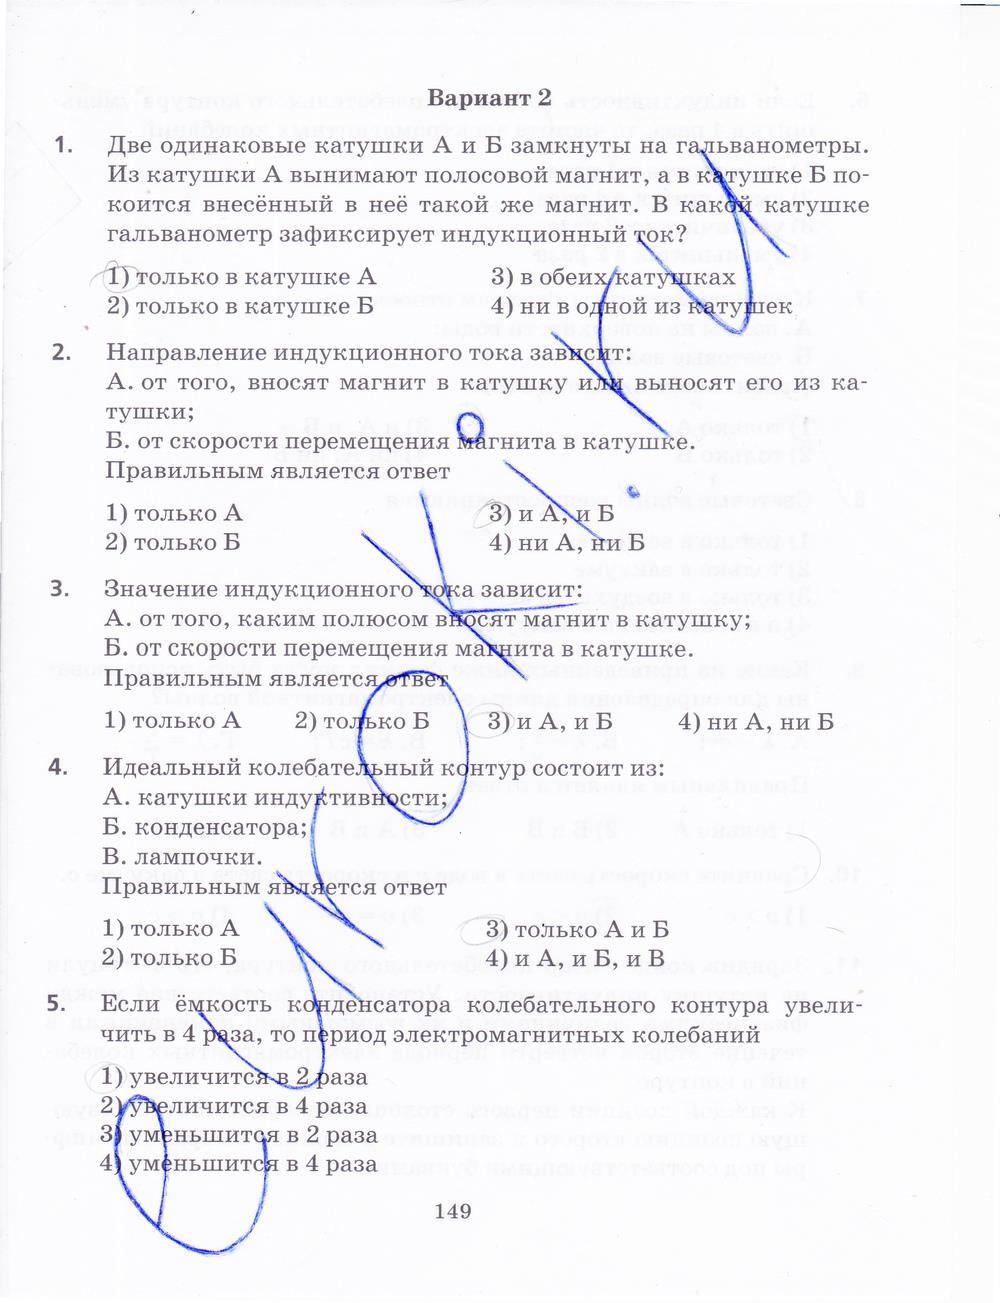 гдз 9 класс рабочая тетрадь страница 149 физика Пурышева, Важеевская, Чаругин